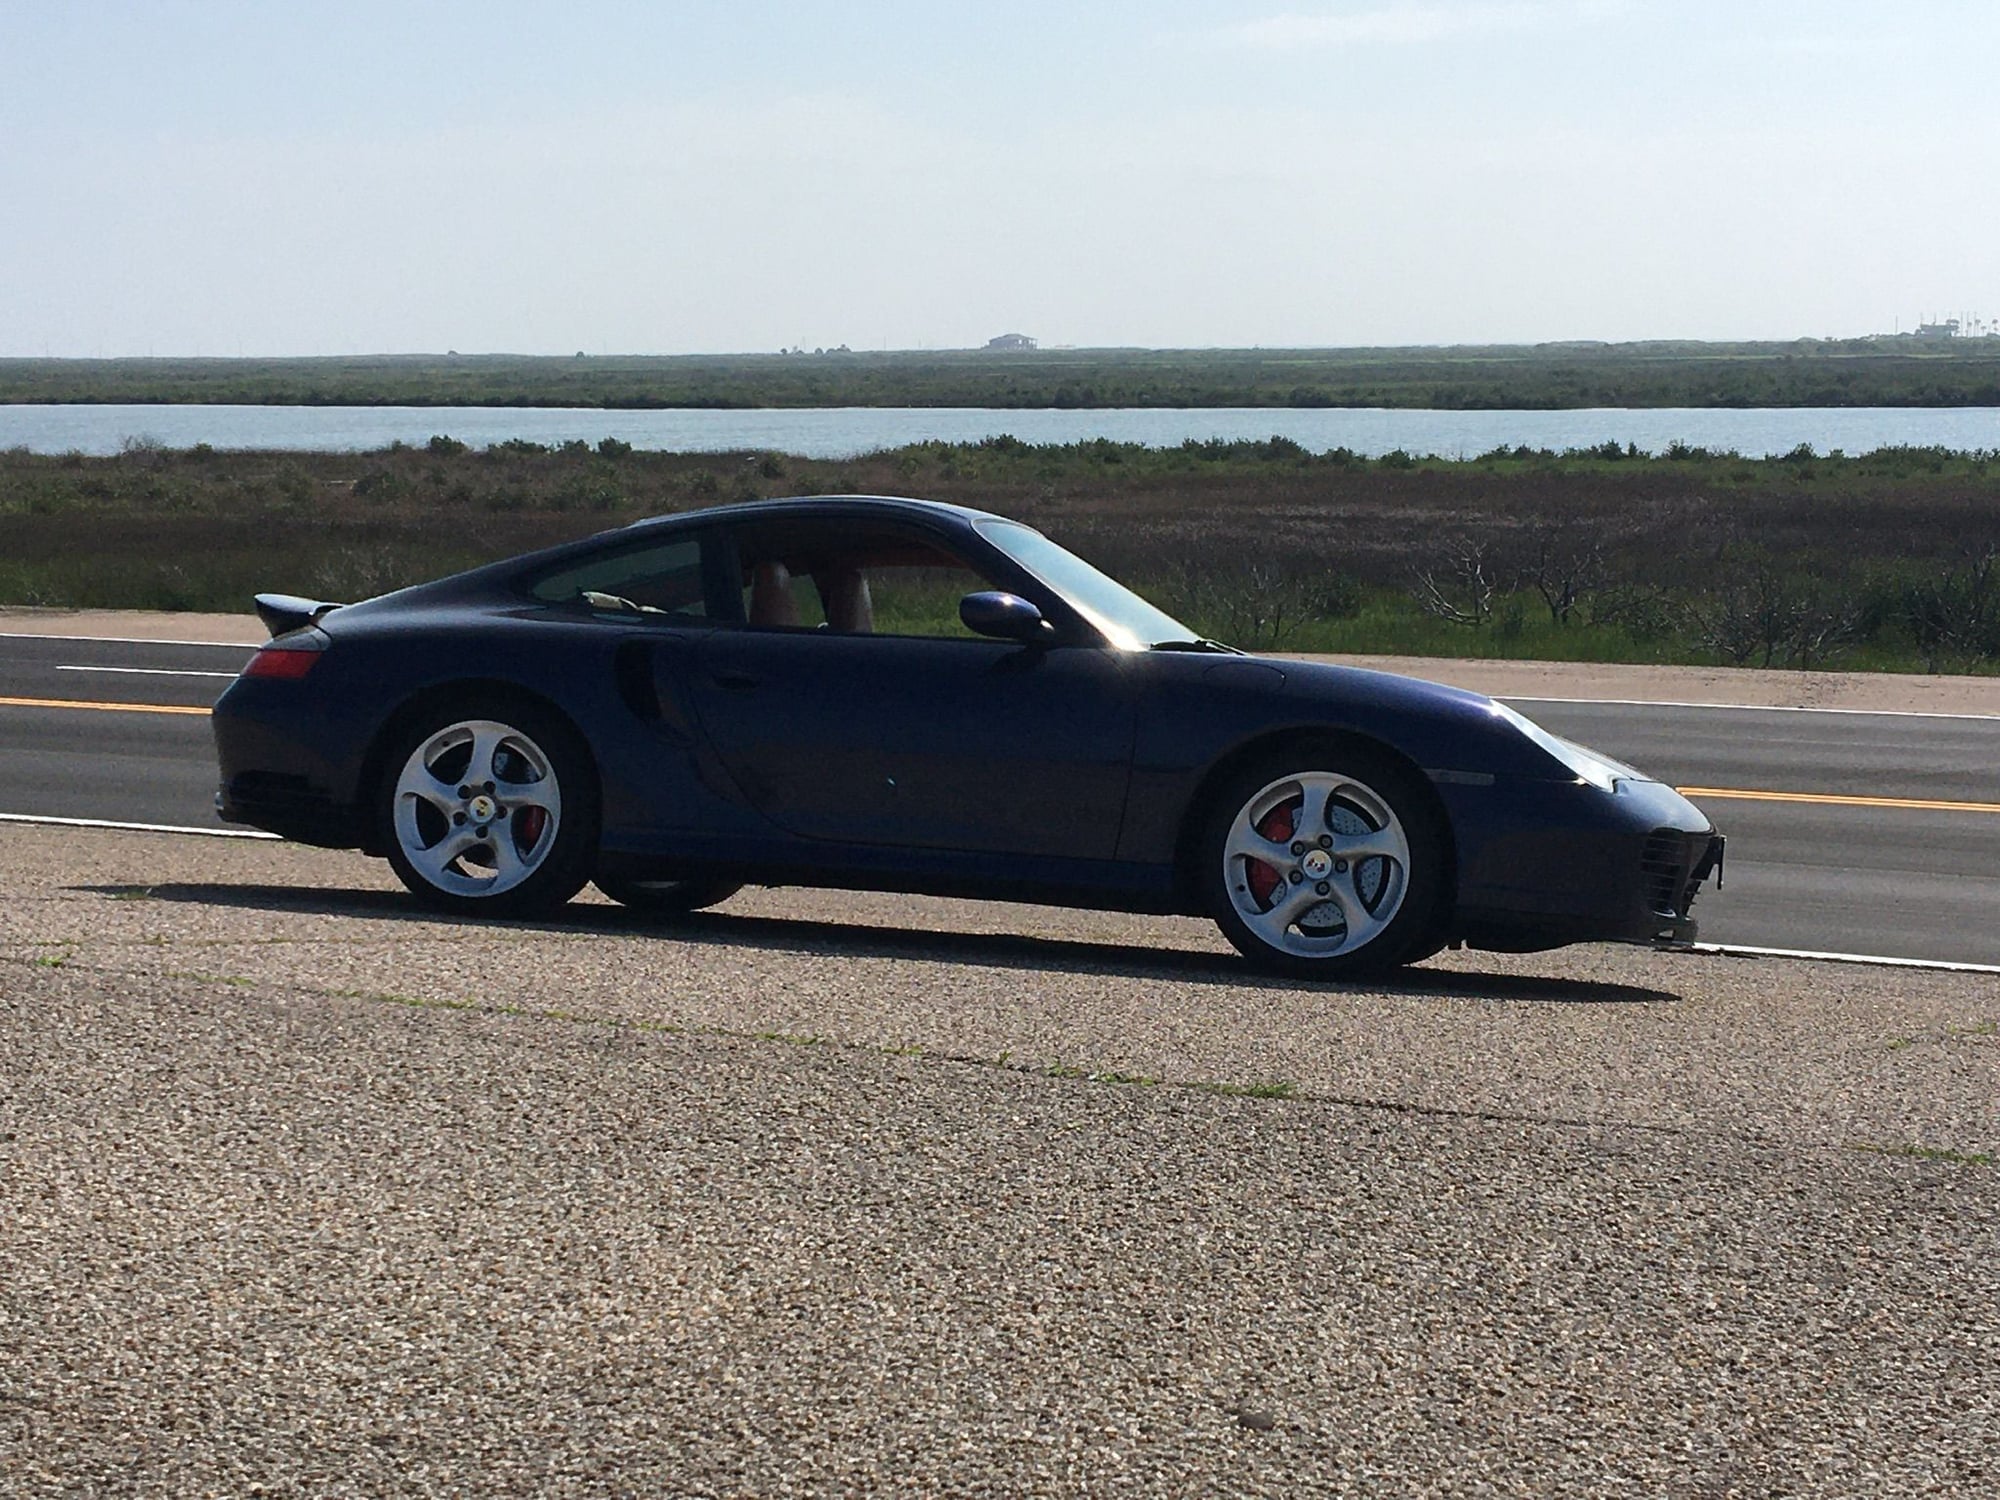 2001 Porsche 911 - 2001 Porsche 996 Turbo- Lapis Blue Metallic/Natural Brown - Used - VIN WP0AB29941S688053 - 32,500 Miles - 6 cyl - AWD - Manual - Coupe - Blue - Houston, TX 77586, United States